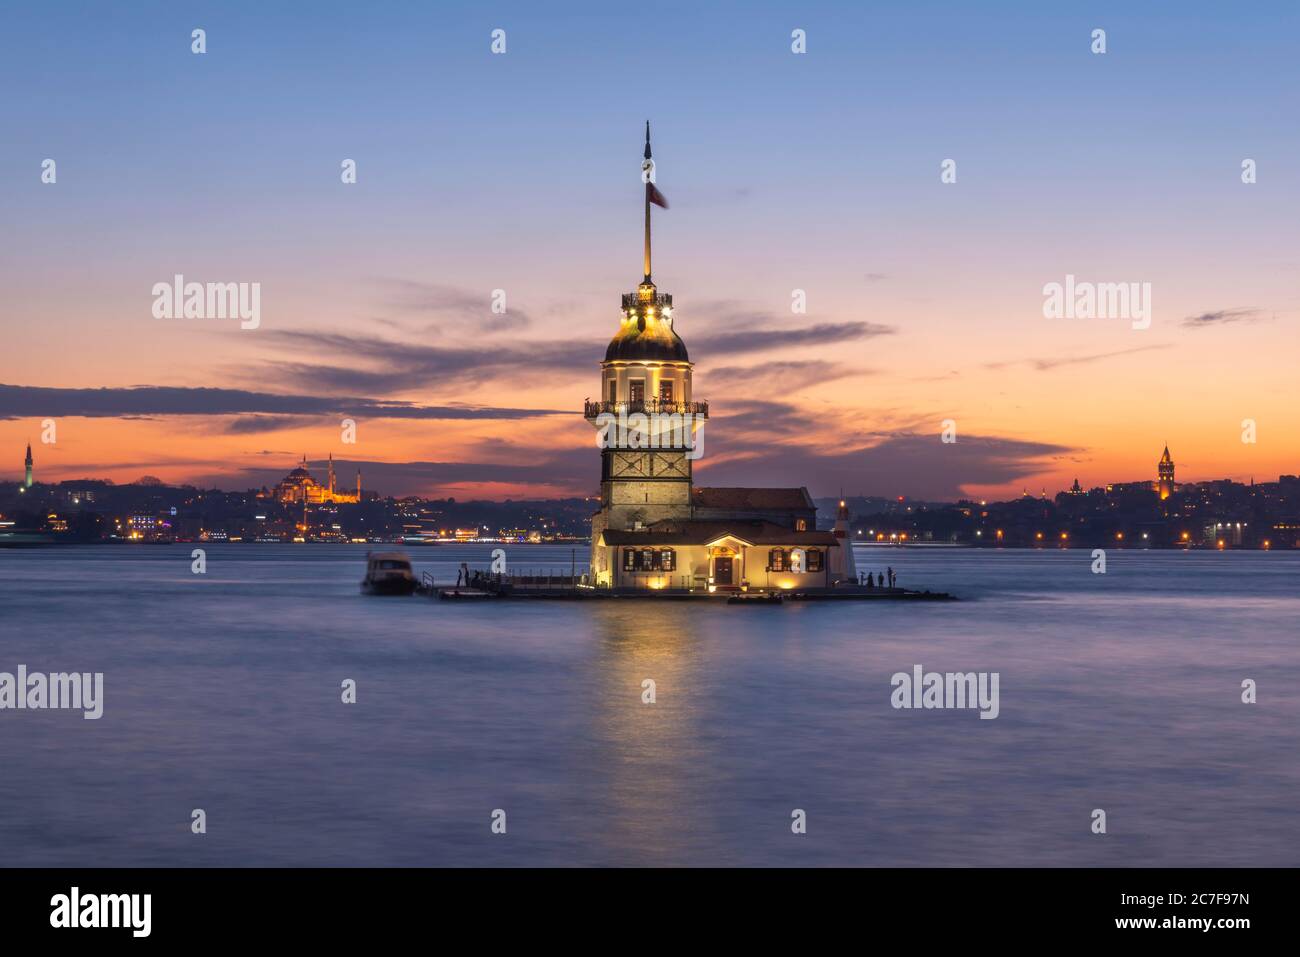 Leuchtturm, Leander's Tower oder Girls' Tower, kiz Kulesi, bei Sonnenuntergang, Insel im Bosporus, Ueskuedar, Istanbul, Türkei Stockfoto